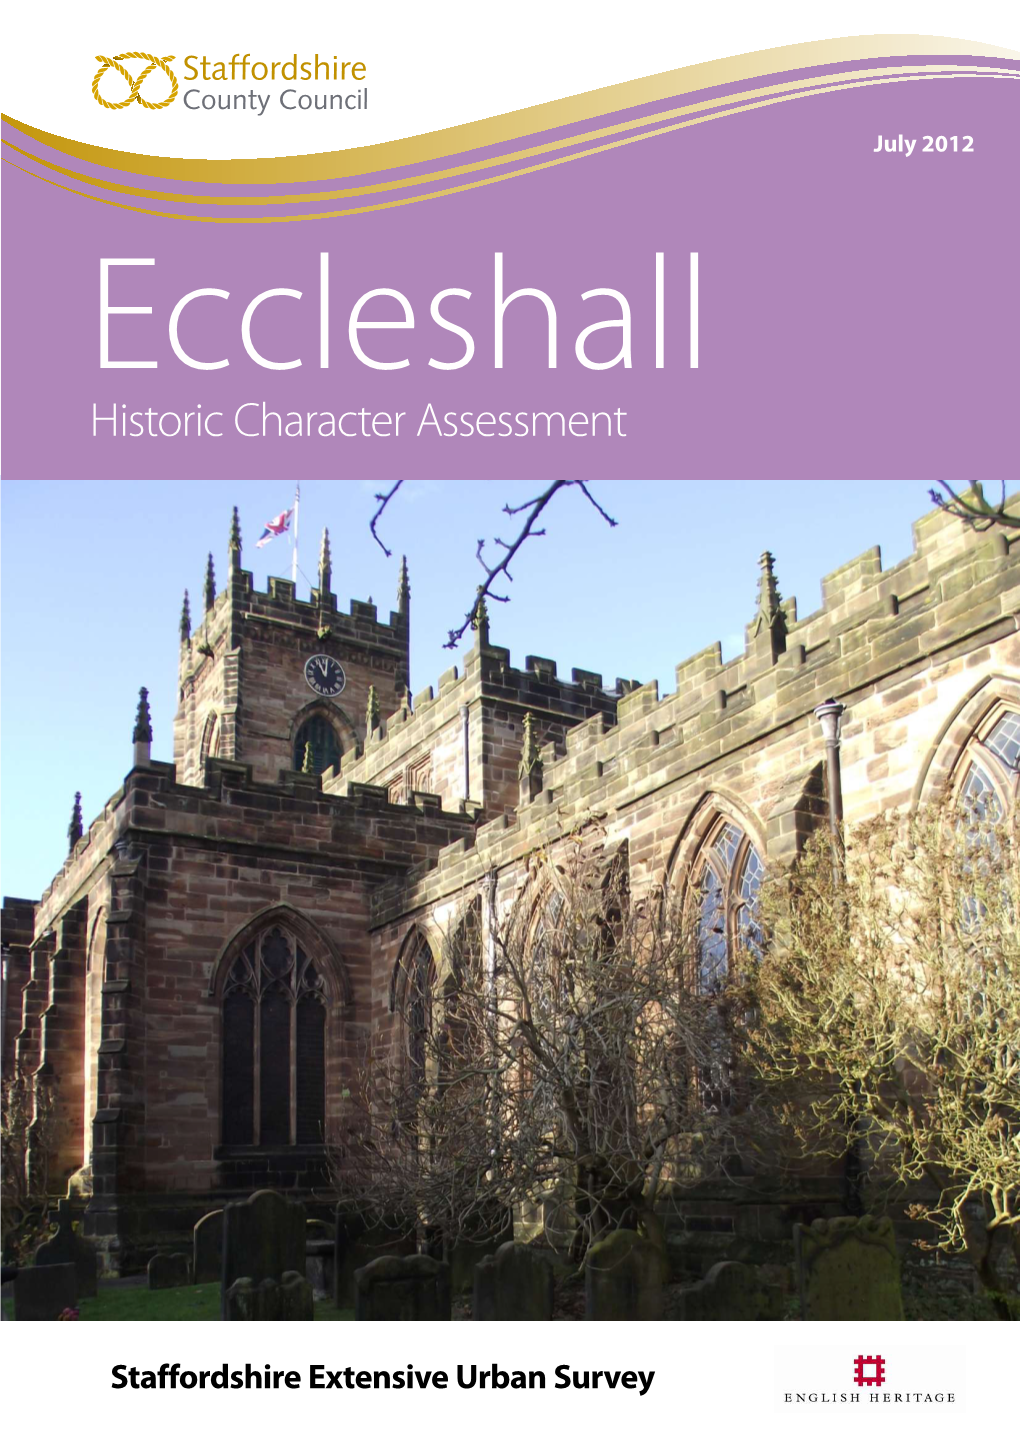 Eccleshall EUS Report.Cdr